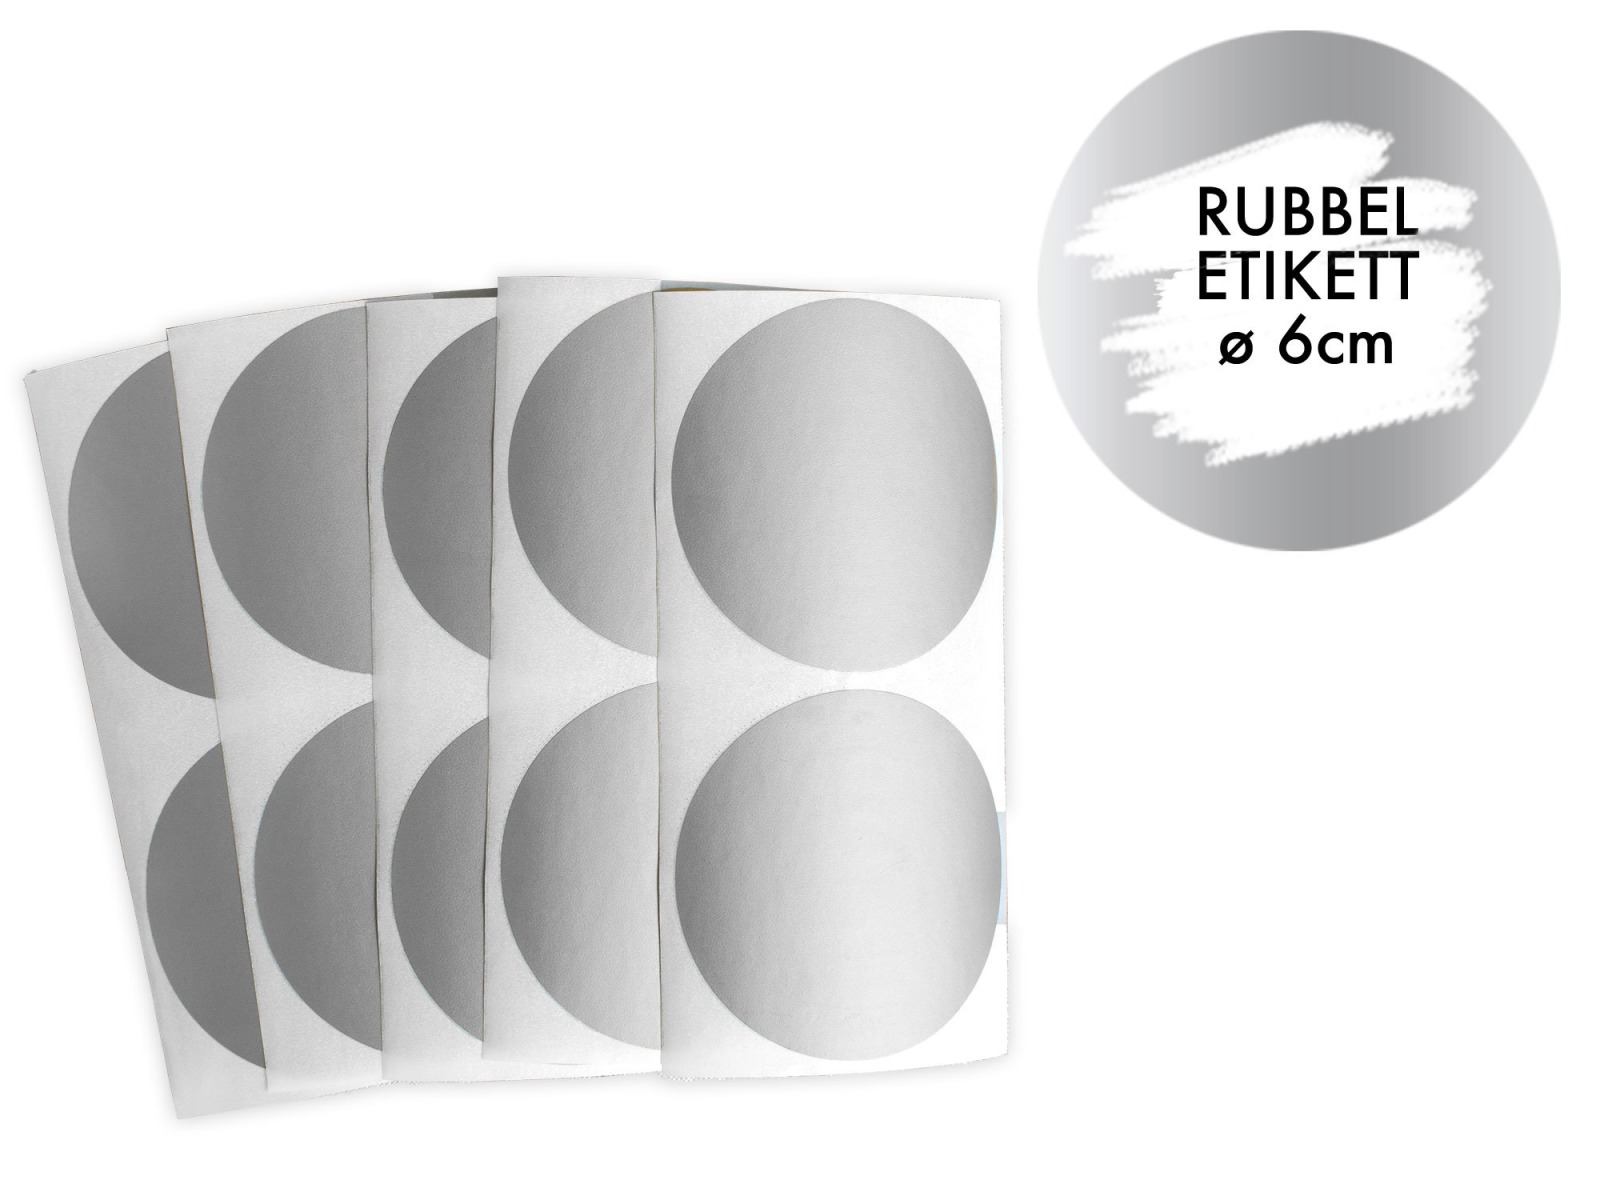 50 Rubbeletiketten Kreis 6 cm | große Rubbelaufkleber SILBER, rund 4